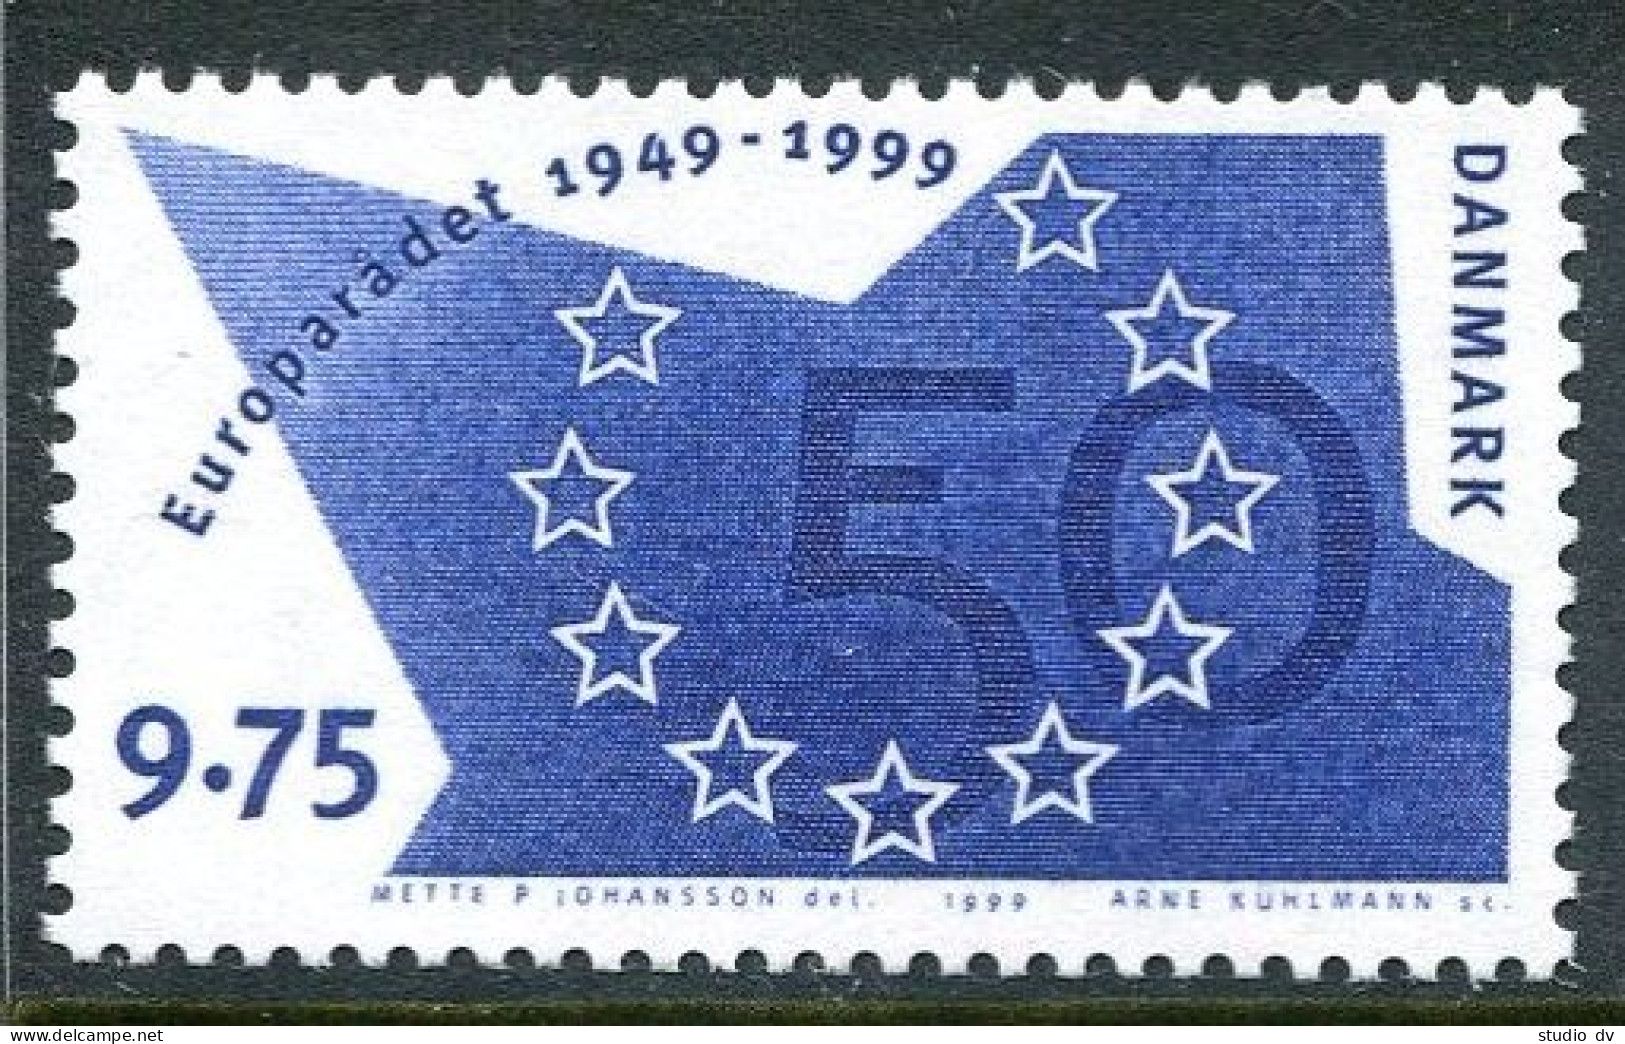 Denmark 1154, MNH. Council Of Europe, 50th Ann. 1999. - Ungebraucht